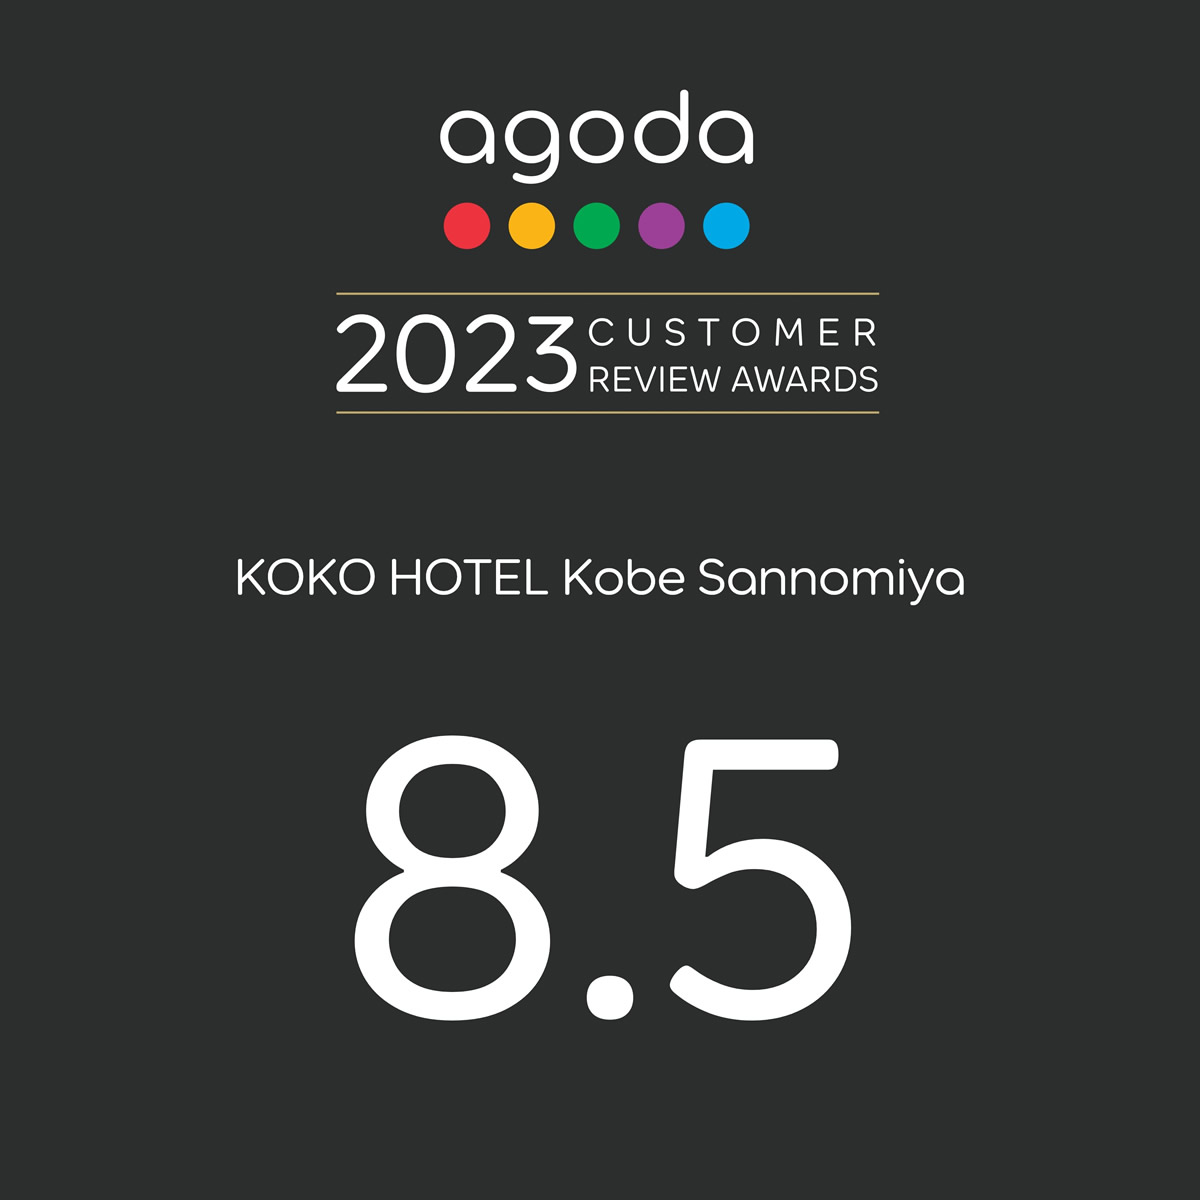 KOKO HOTELS「agoda CUSTOMER REVIEW AWARDS 2023」を受賞